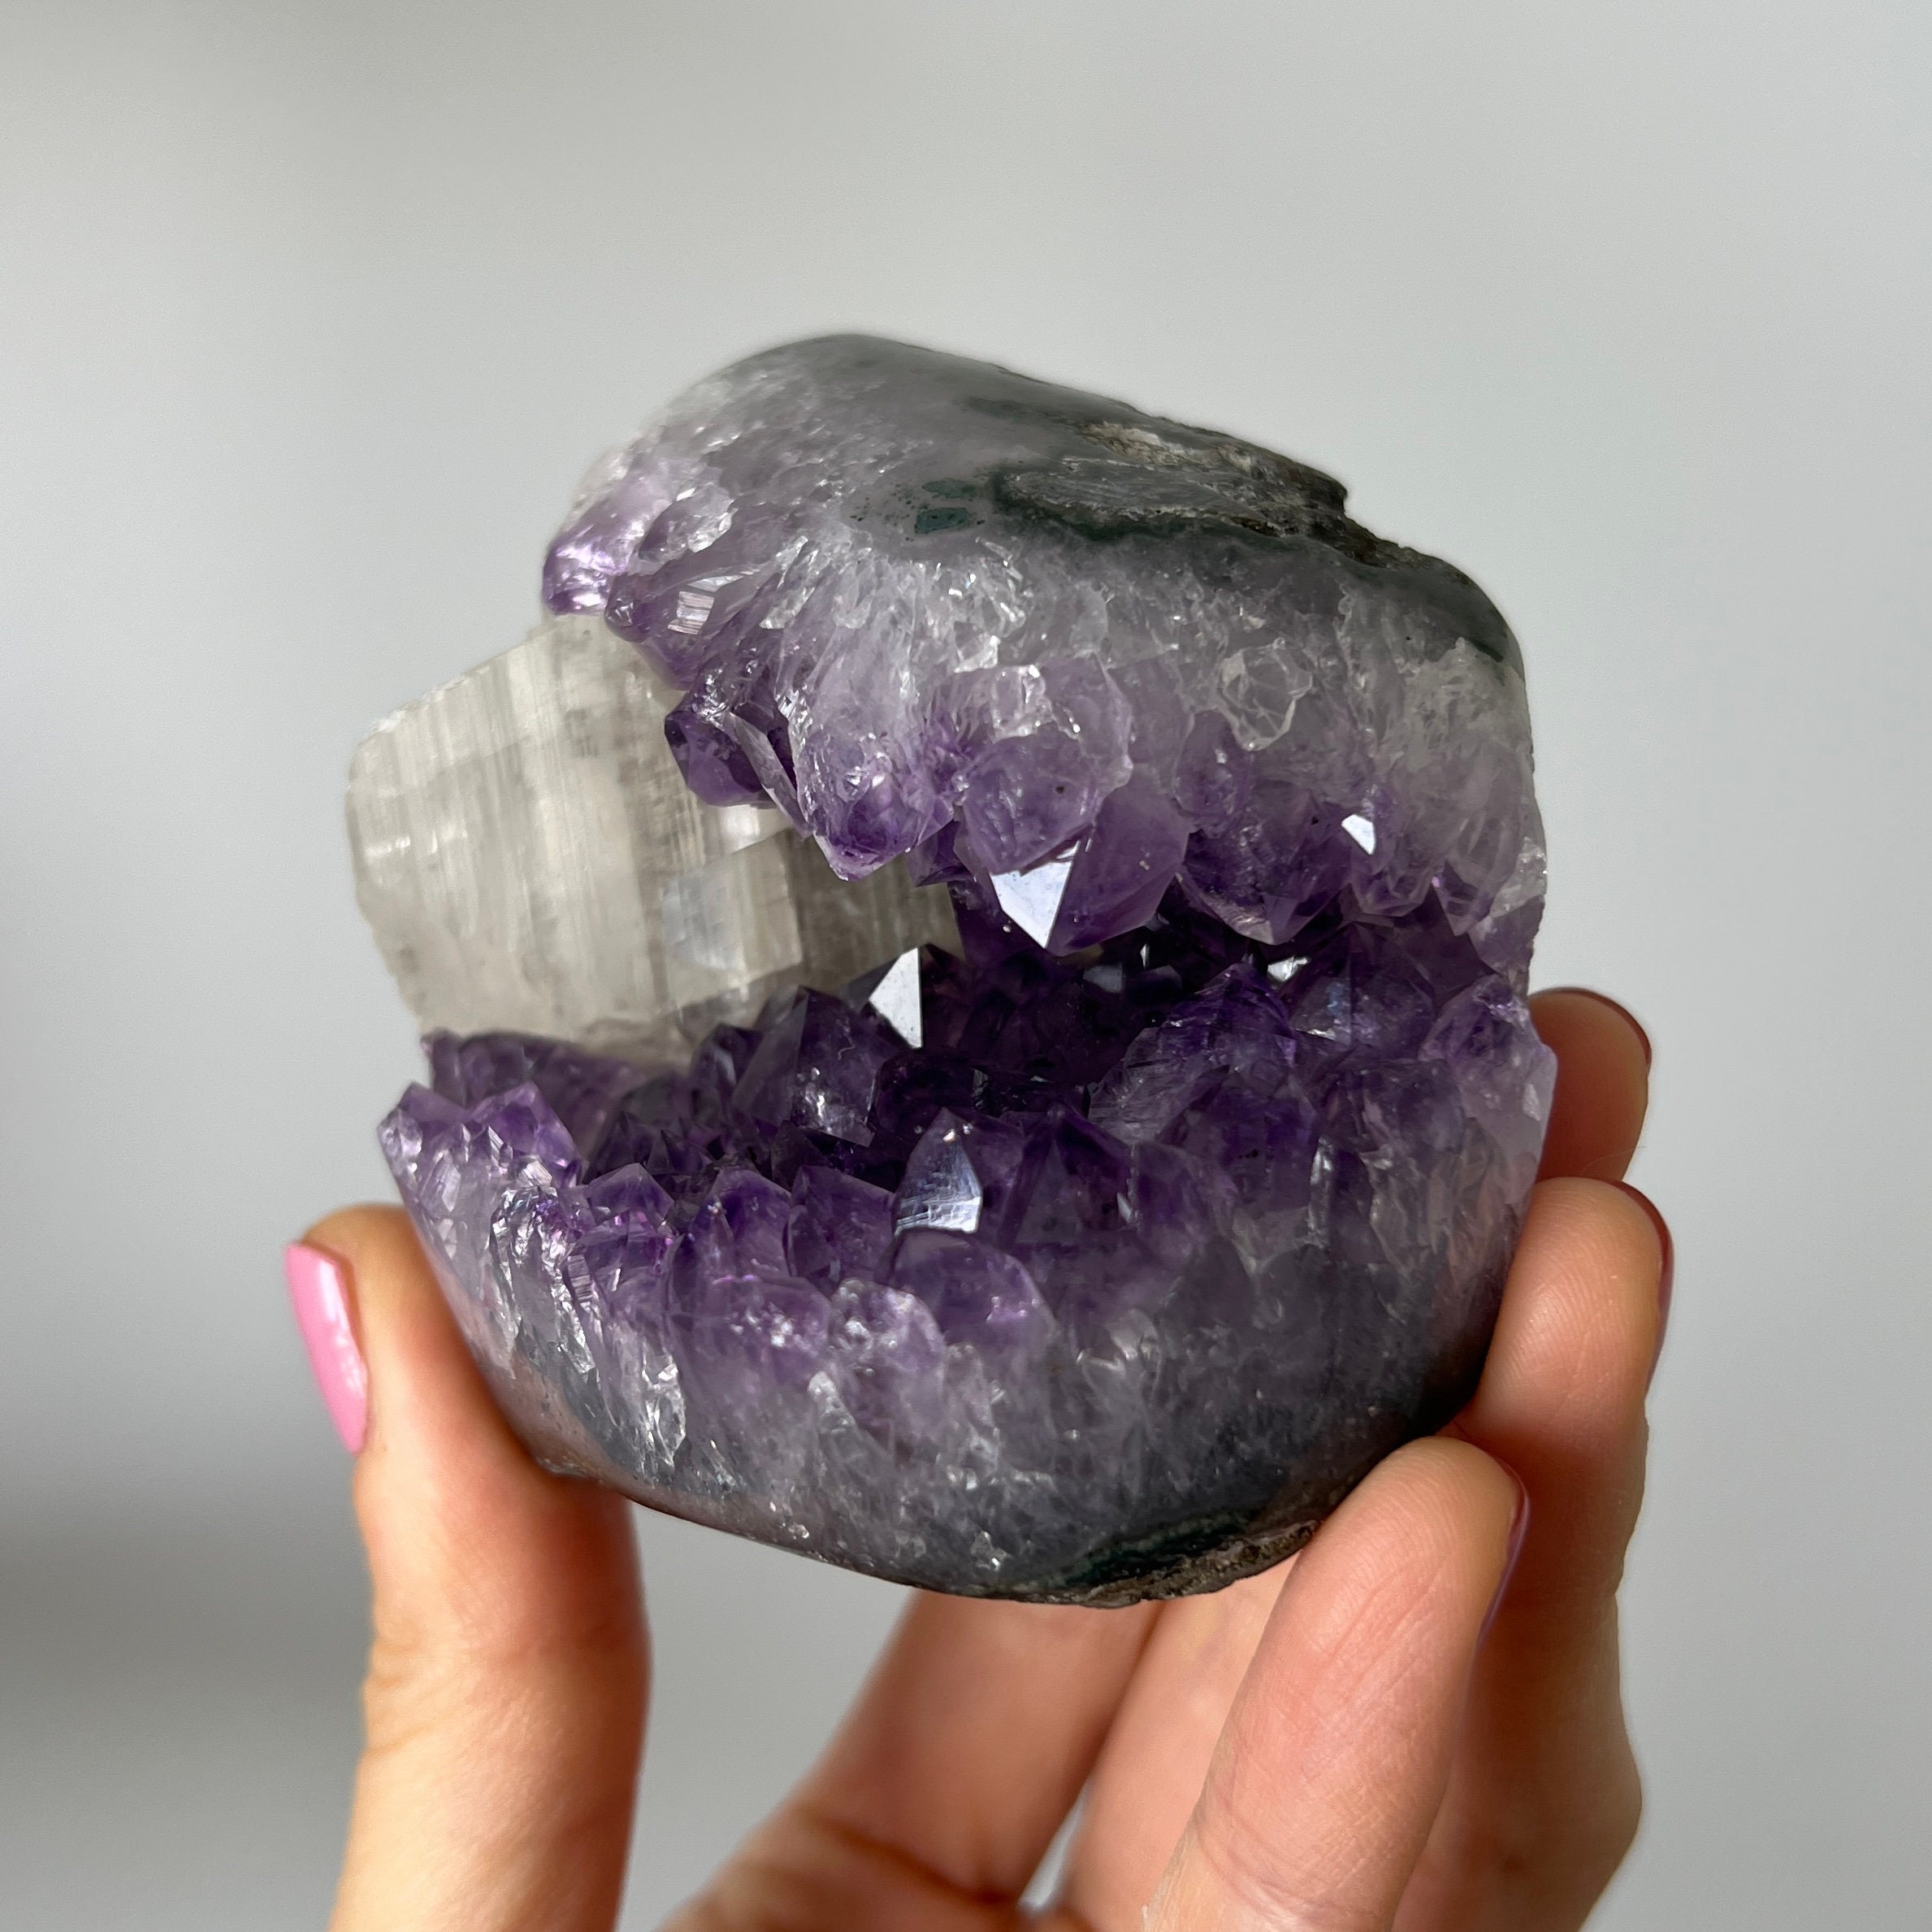 Amethyst Crystal Cluster: A Grade Druze, Choose Size! (Amethyst